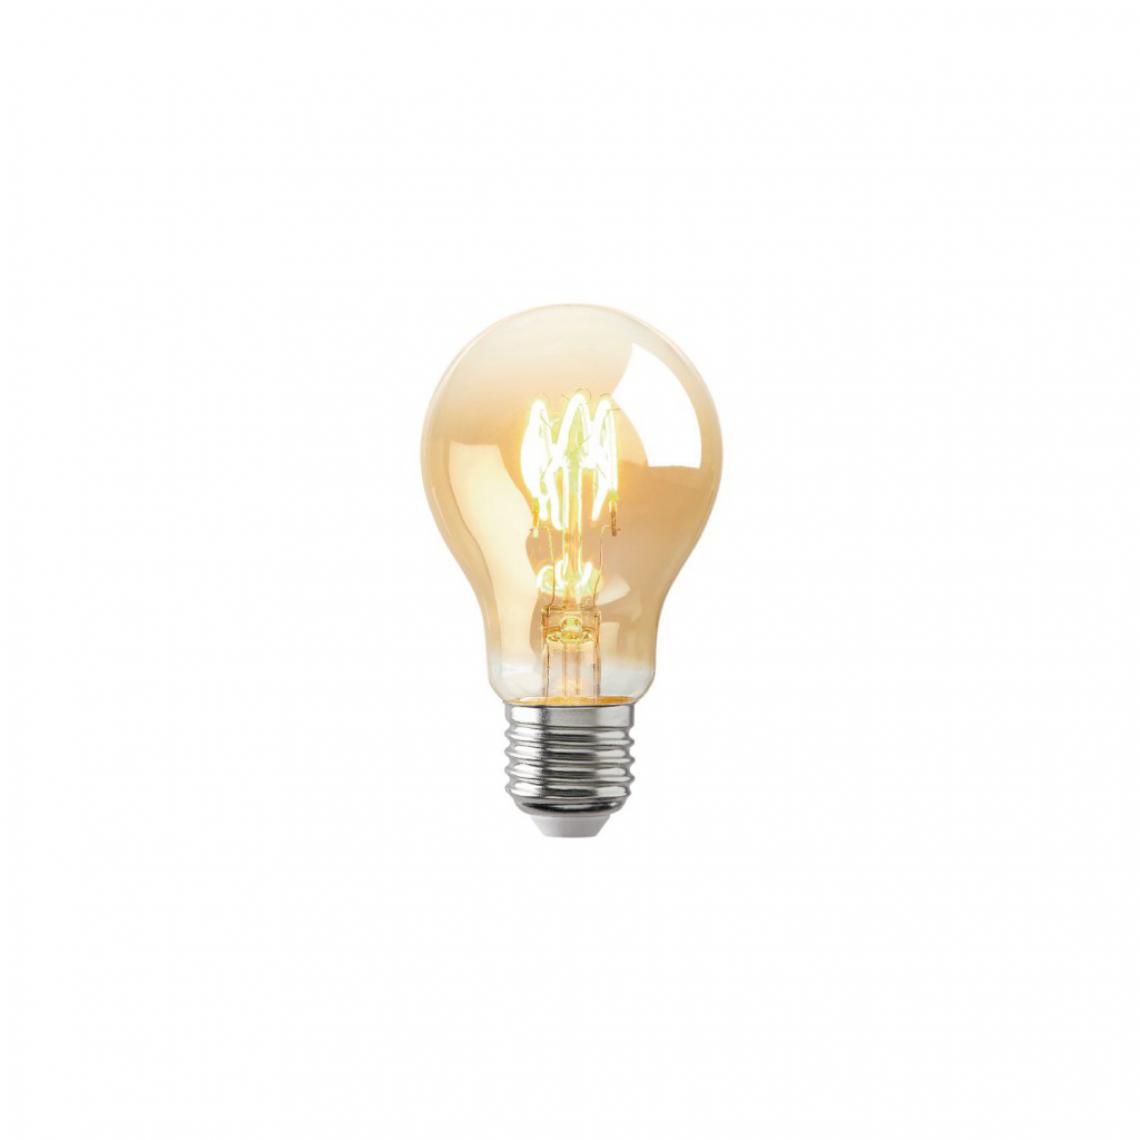 Alpexe - Lampe LED Vintage A60 2.3 W 125 lm 2000 K - Ampoules LED